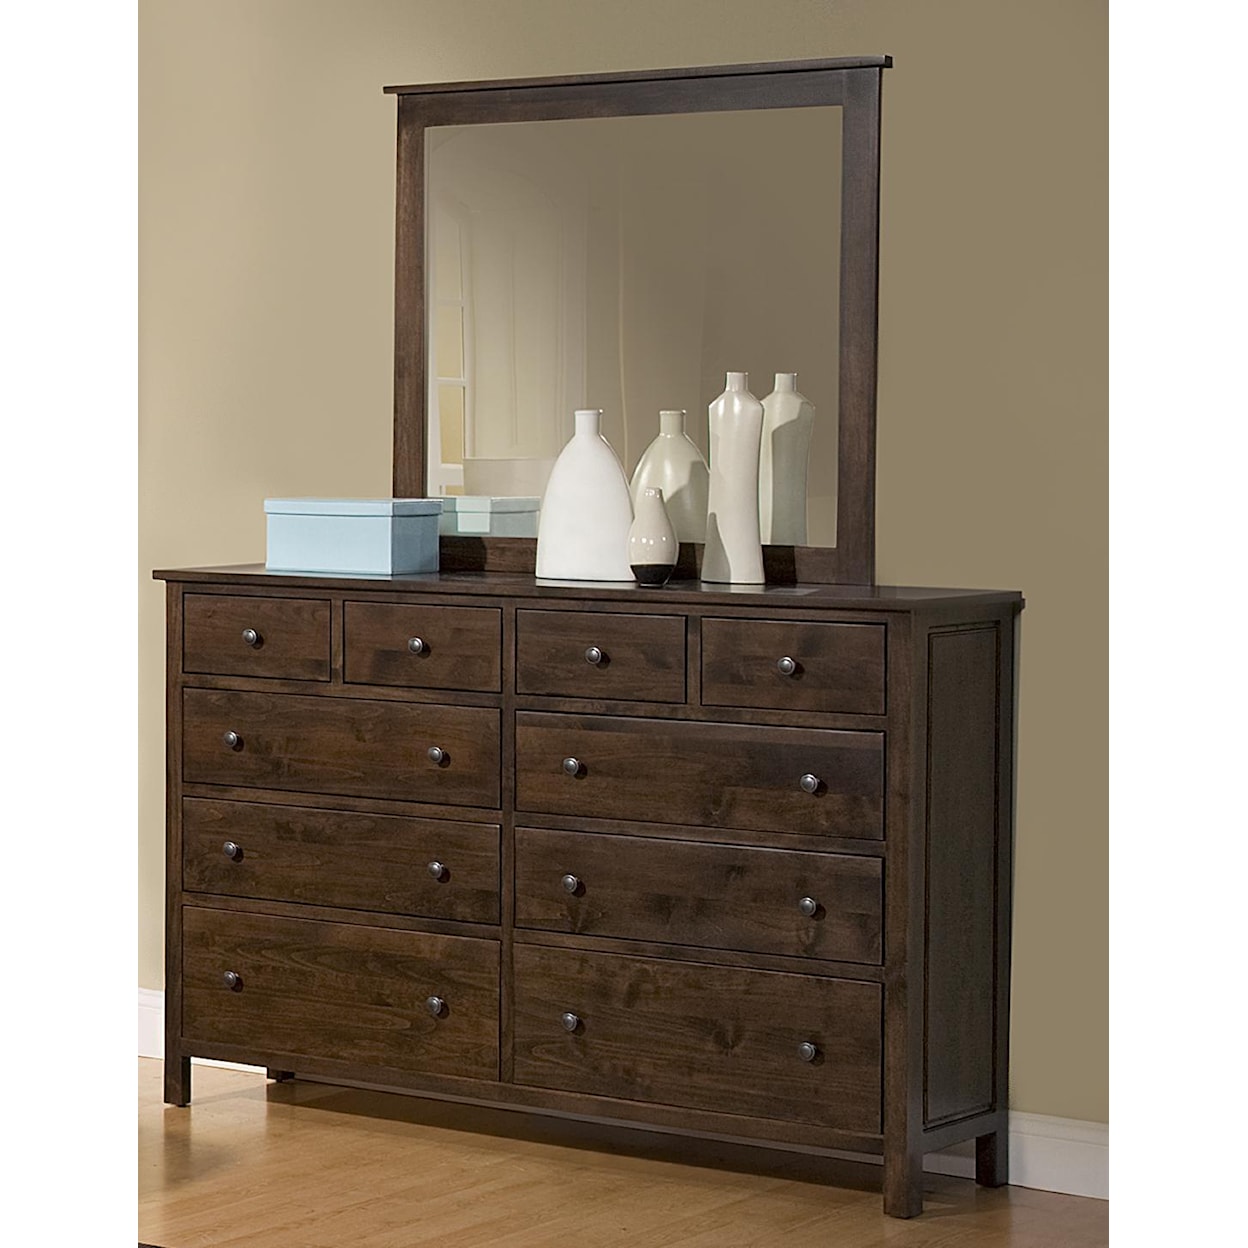 Archbold Furniture Elevated Storage Bed 10 Drawer Dresser & Mirror Combo